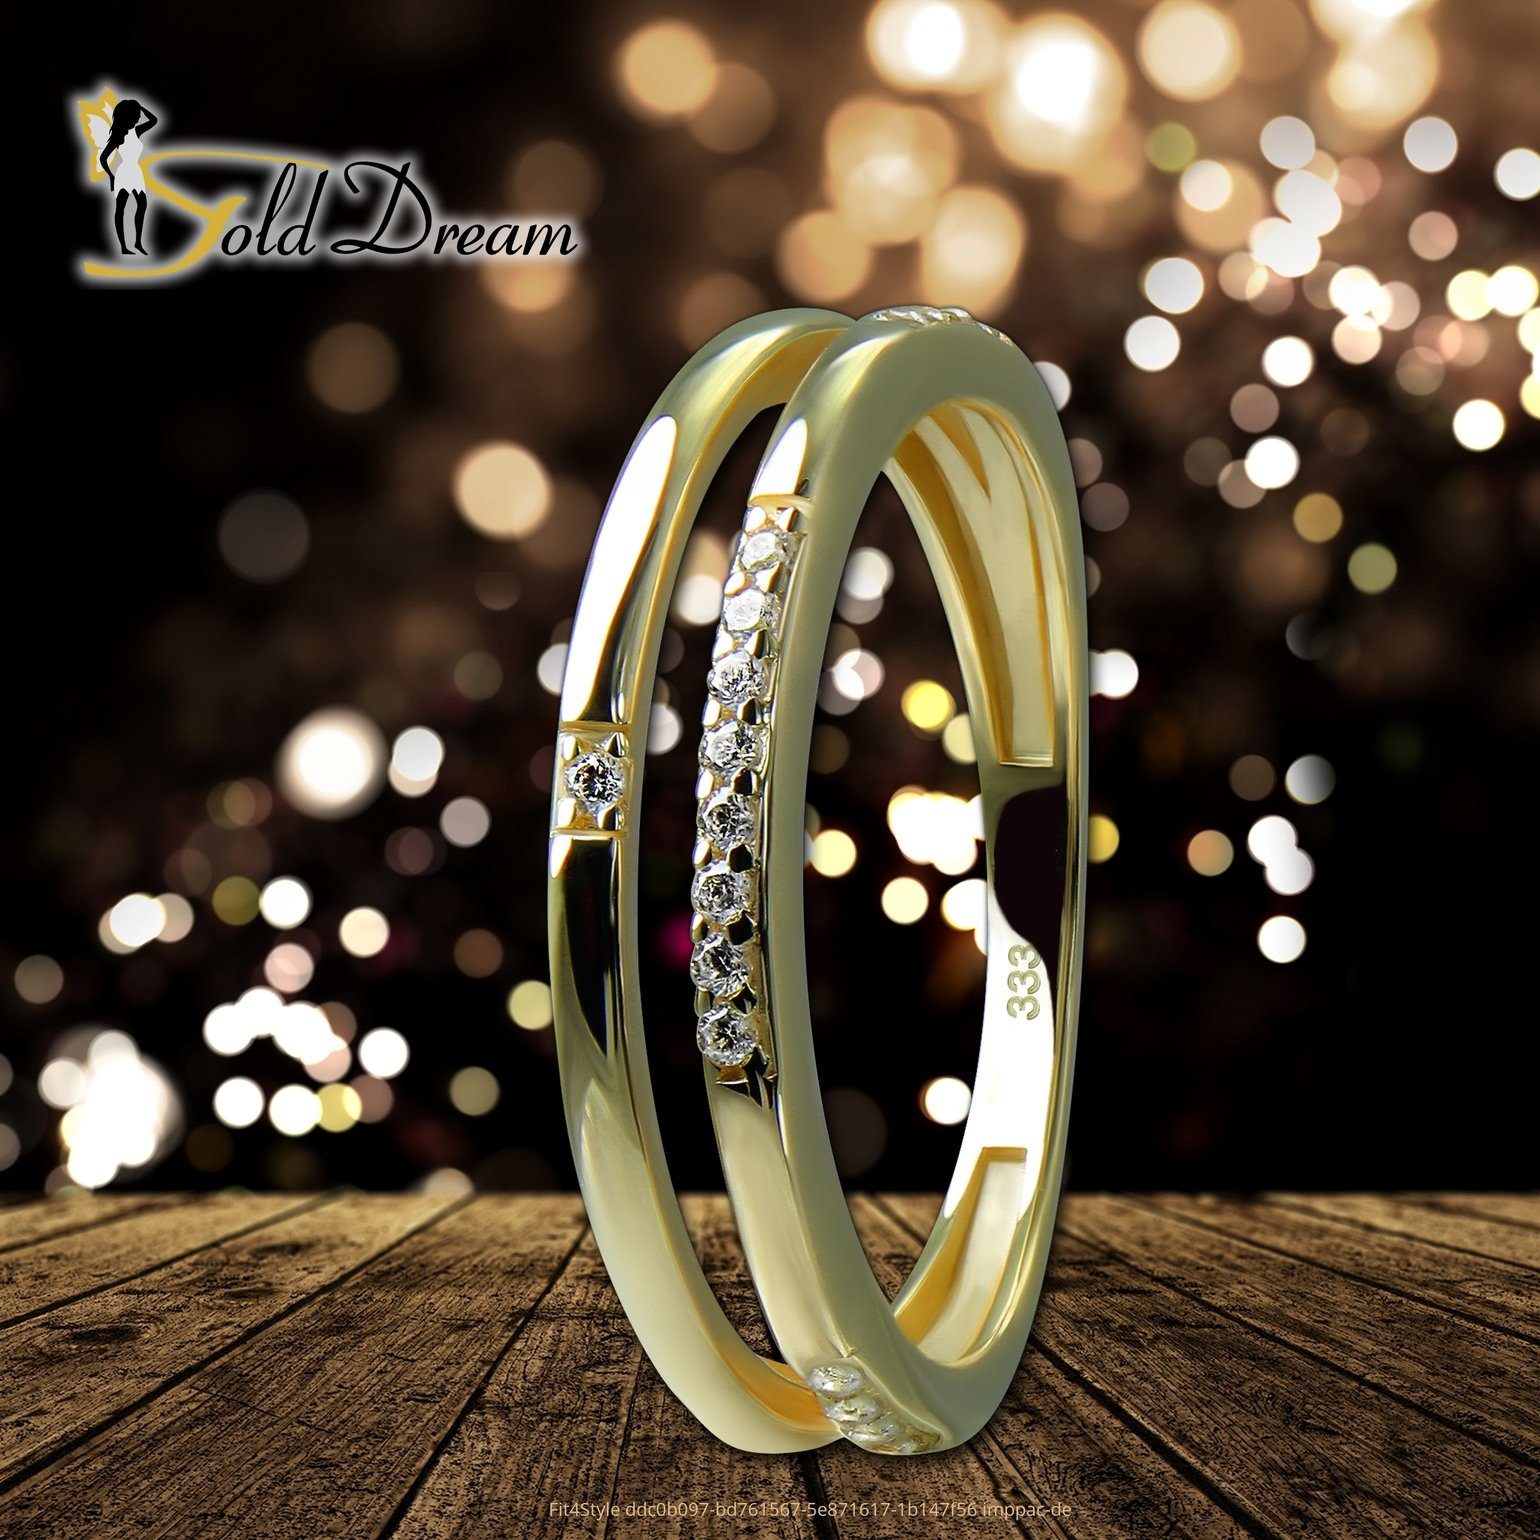 333 Karat, Goldring Gr.58 GoldDream gold, Double (Fingerring), Gold Ring Farbe: Gelbgold Ring weiß GoldDream - Double Damen 8